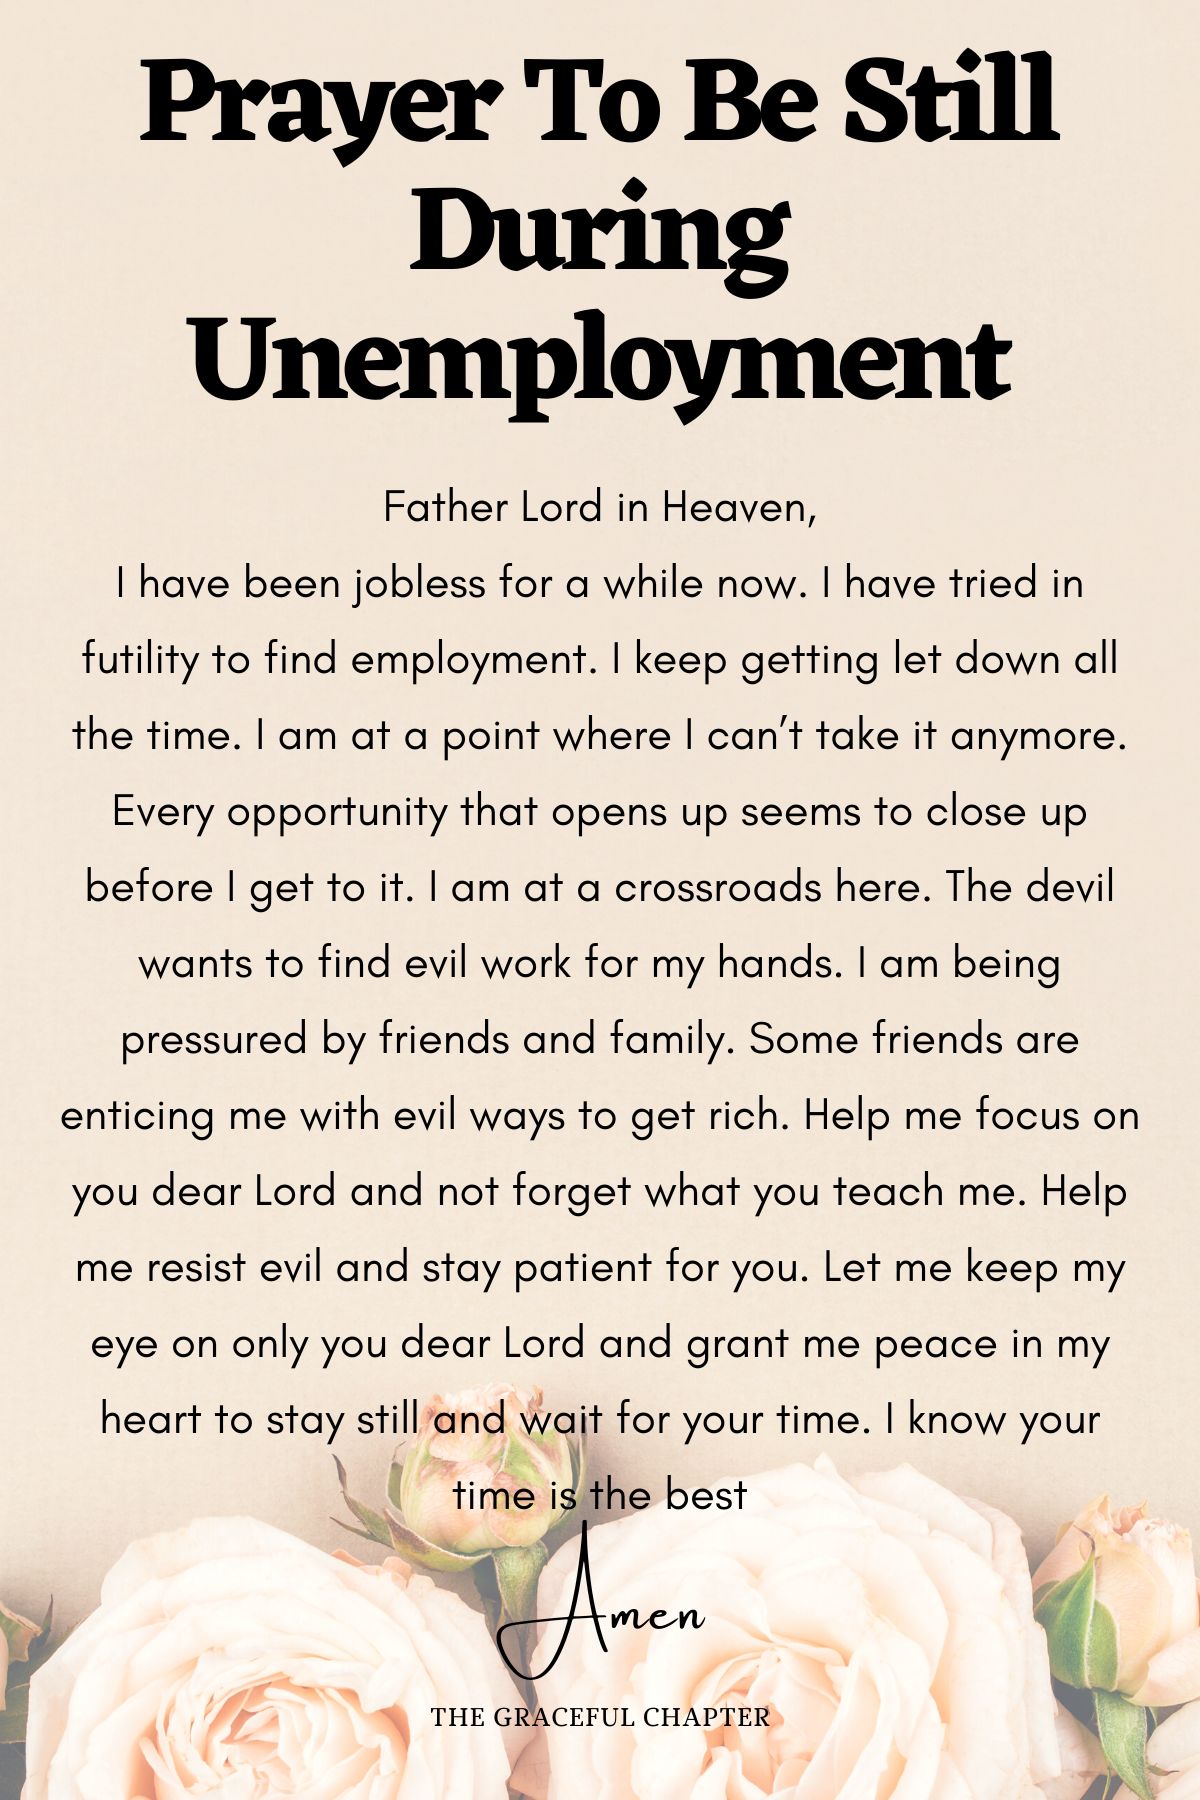  Prayer To Be still during unemployment